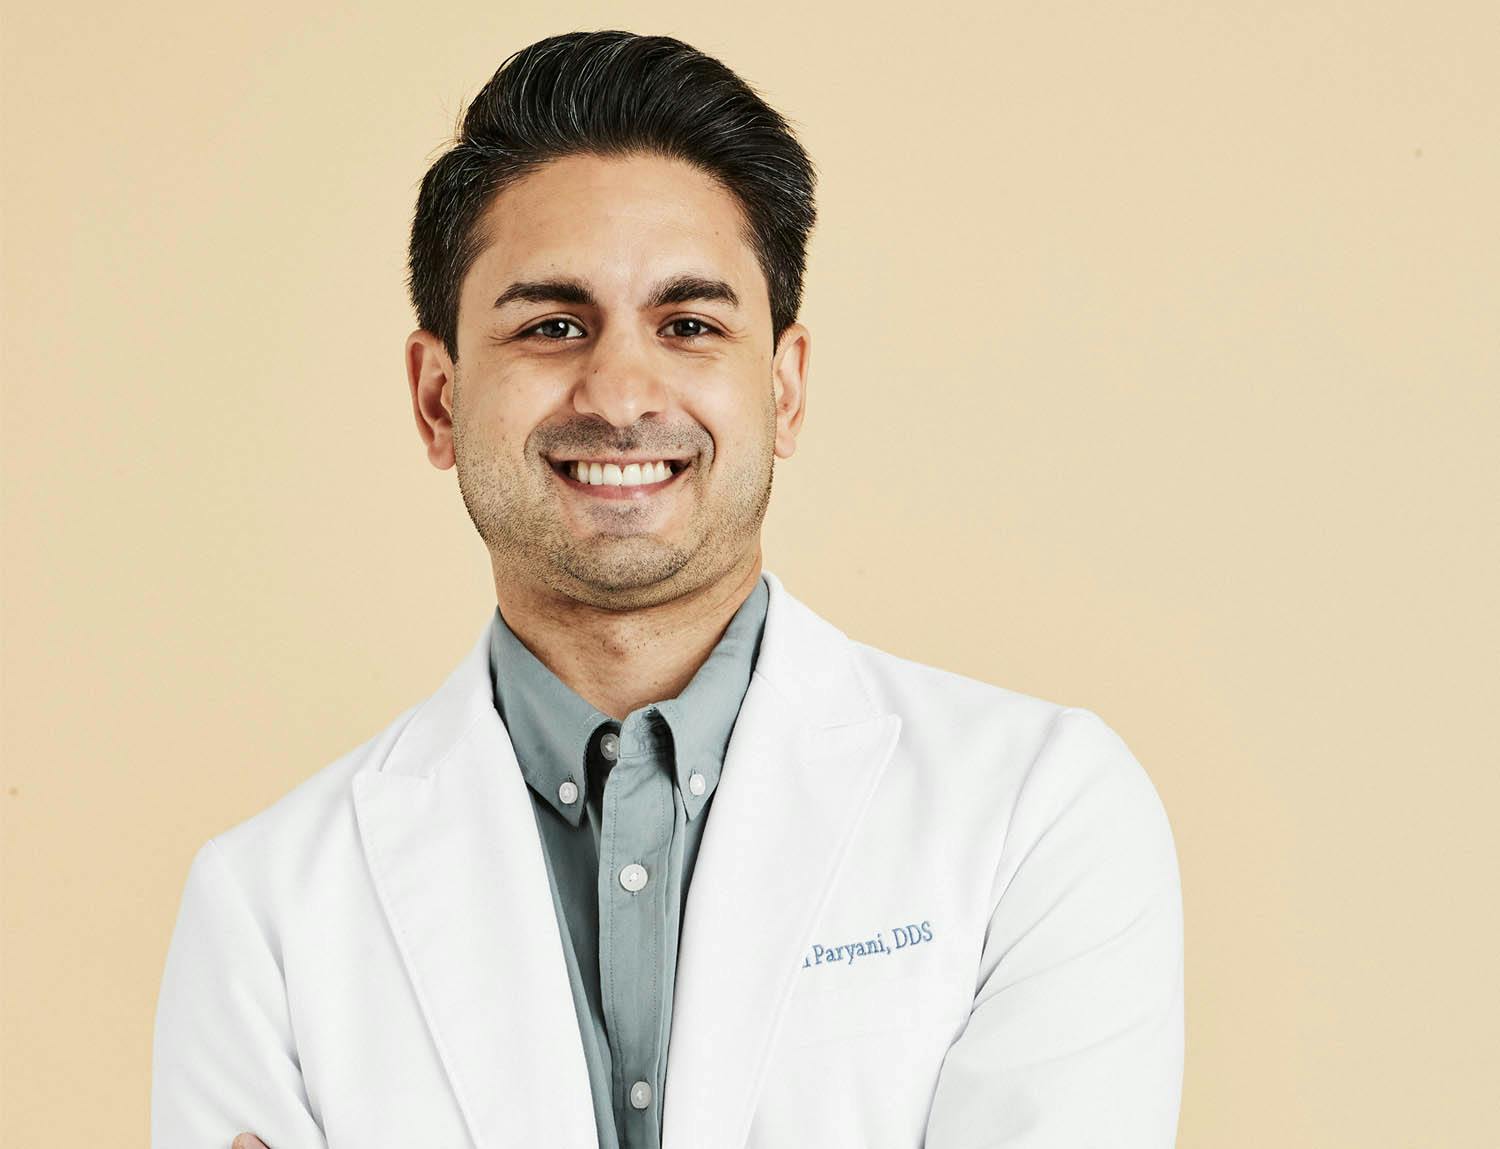 About Dr. Narain Paryani - Dentist at Tend New York City